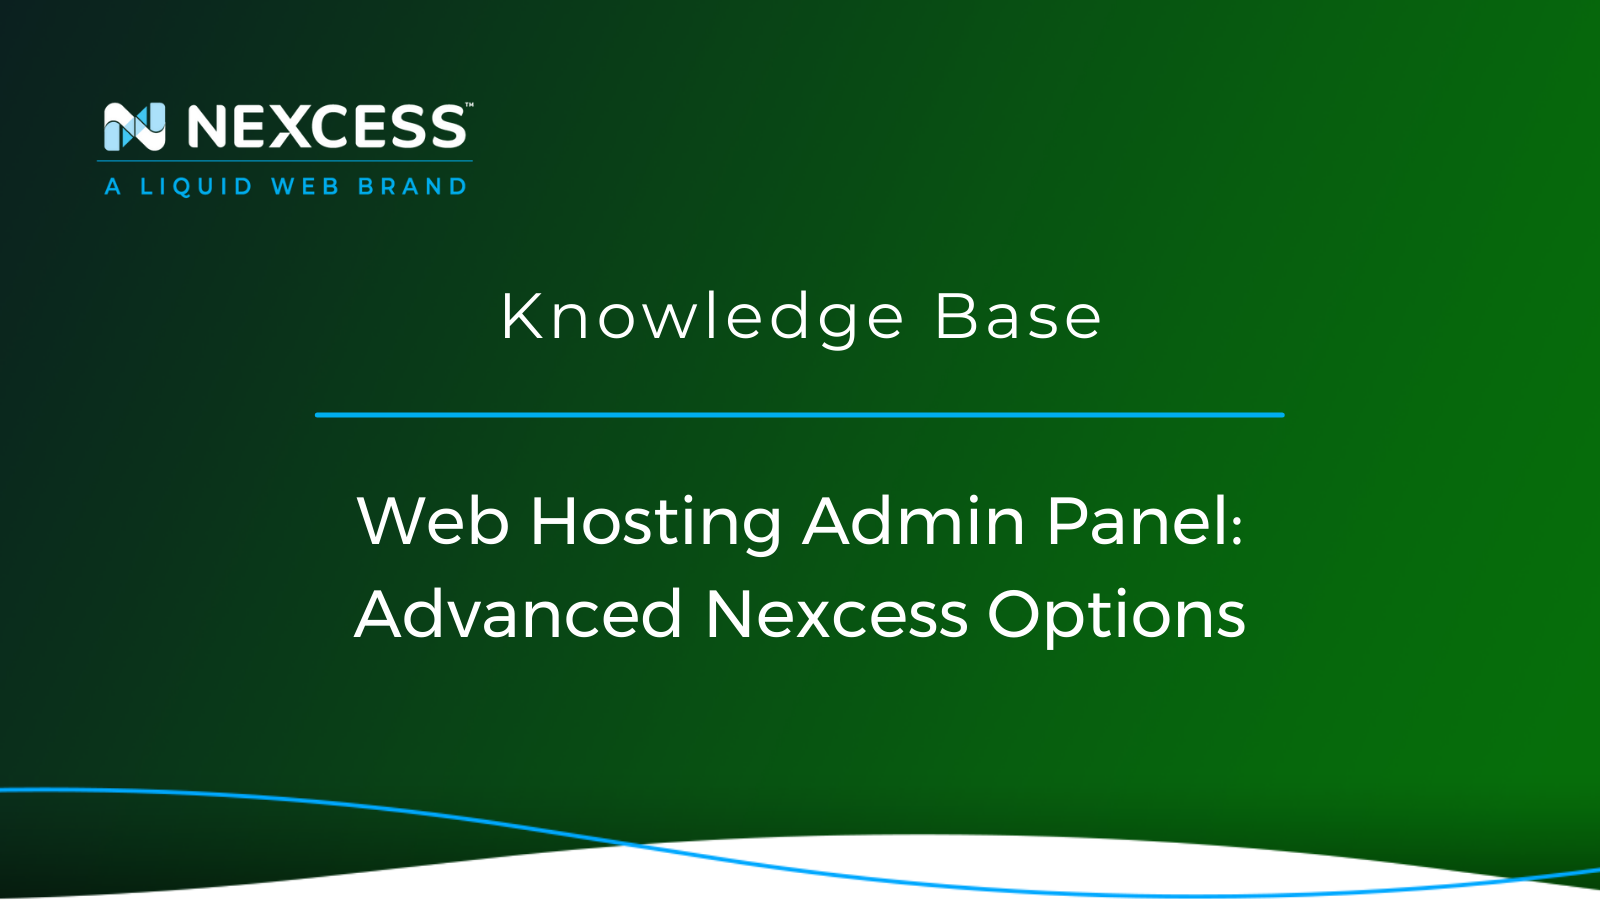 Web Hosting Admin Panel: Advanced Nexcess Options